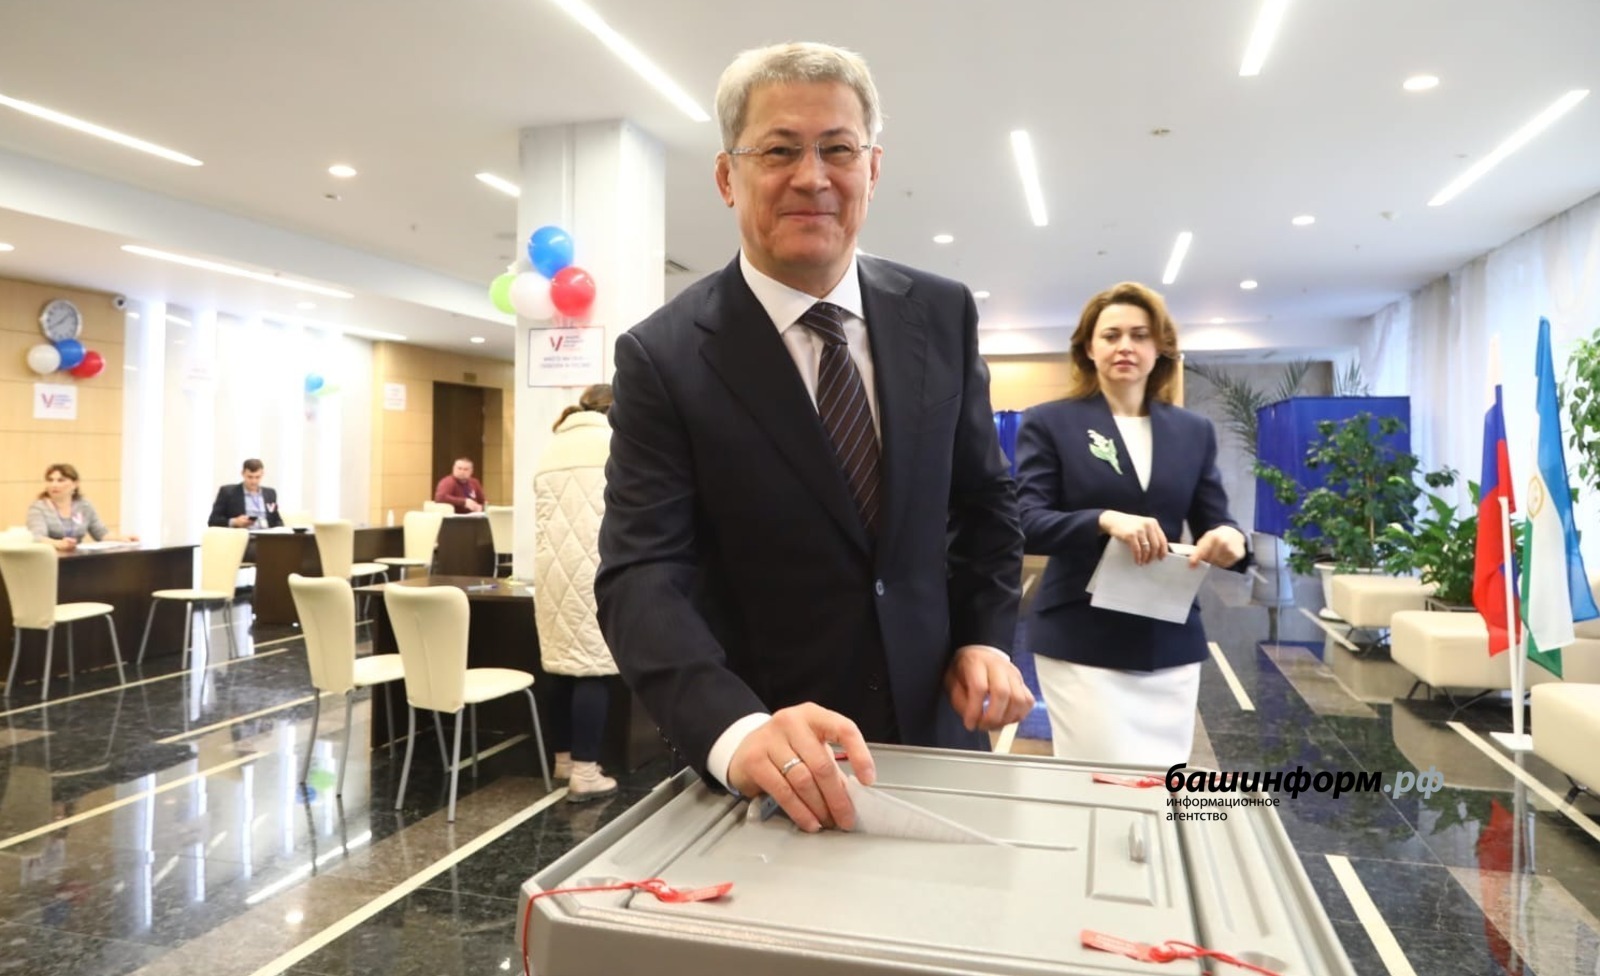 15 марта утром Глава Башкирии Радий Хабиров  с супругой отдали  голоса на выборах президента  РФ.